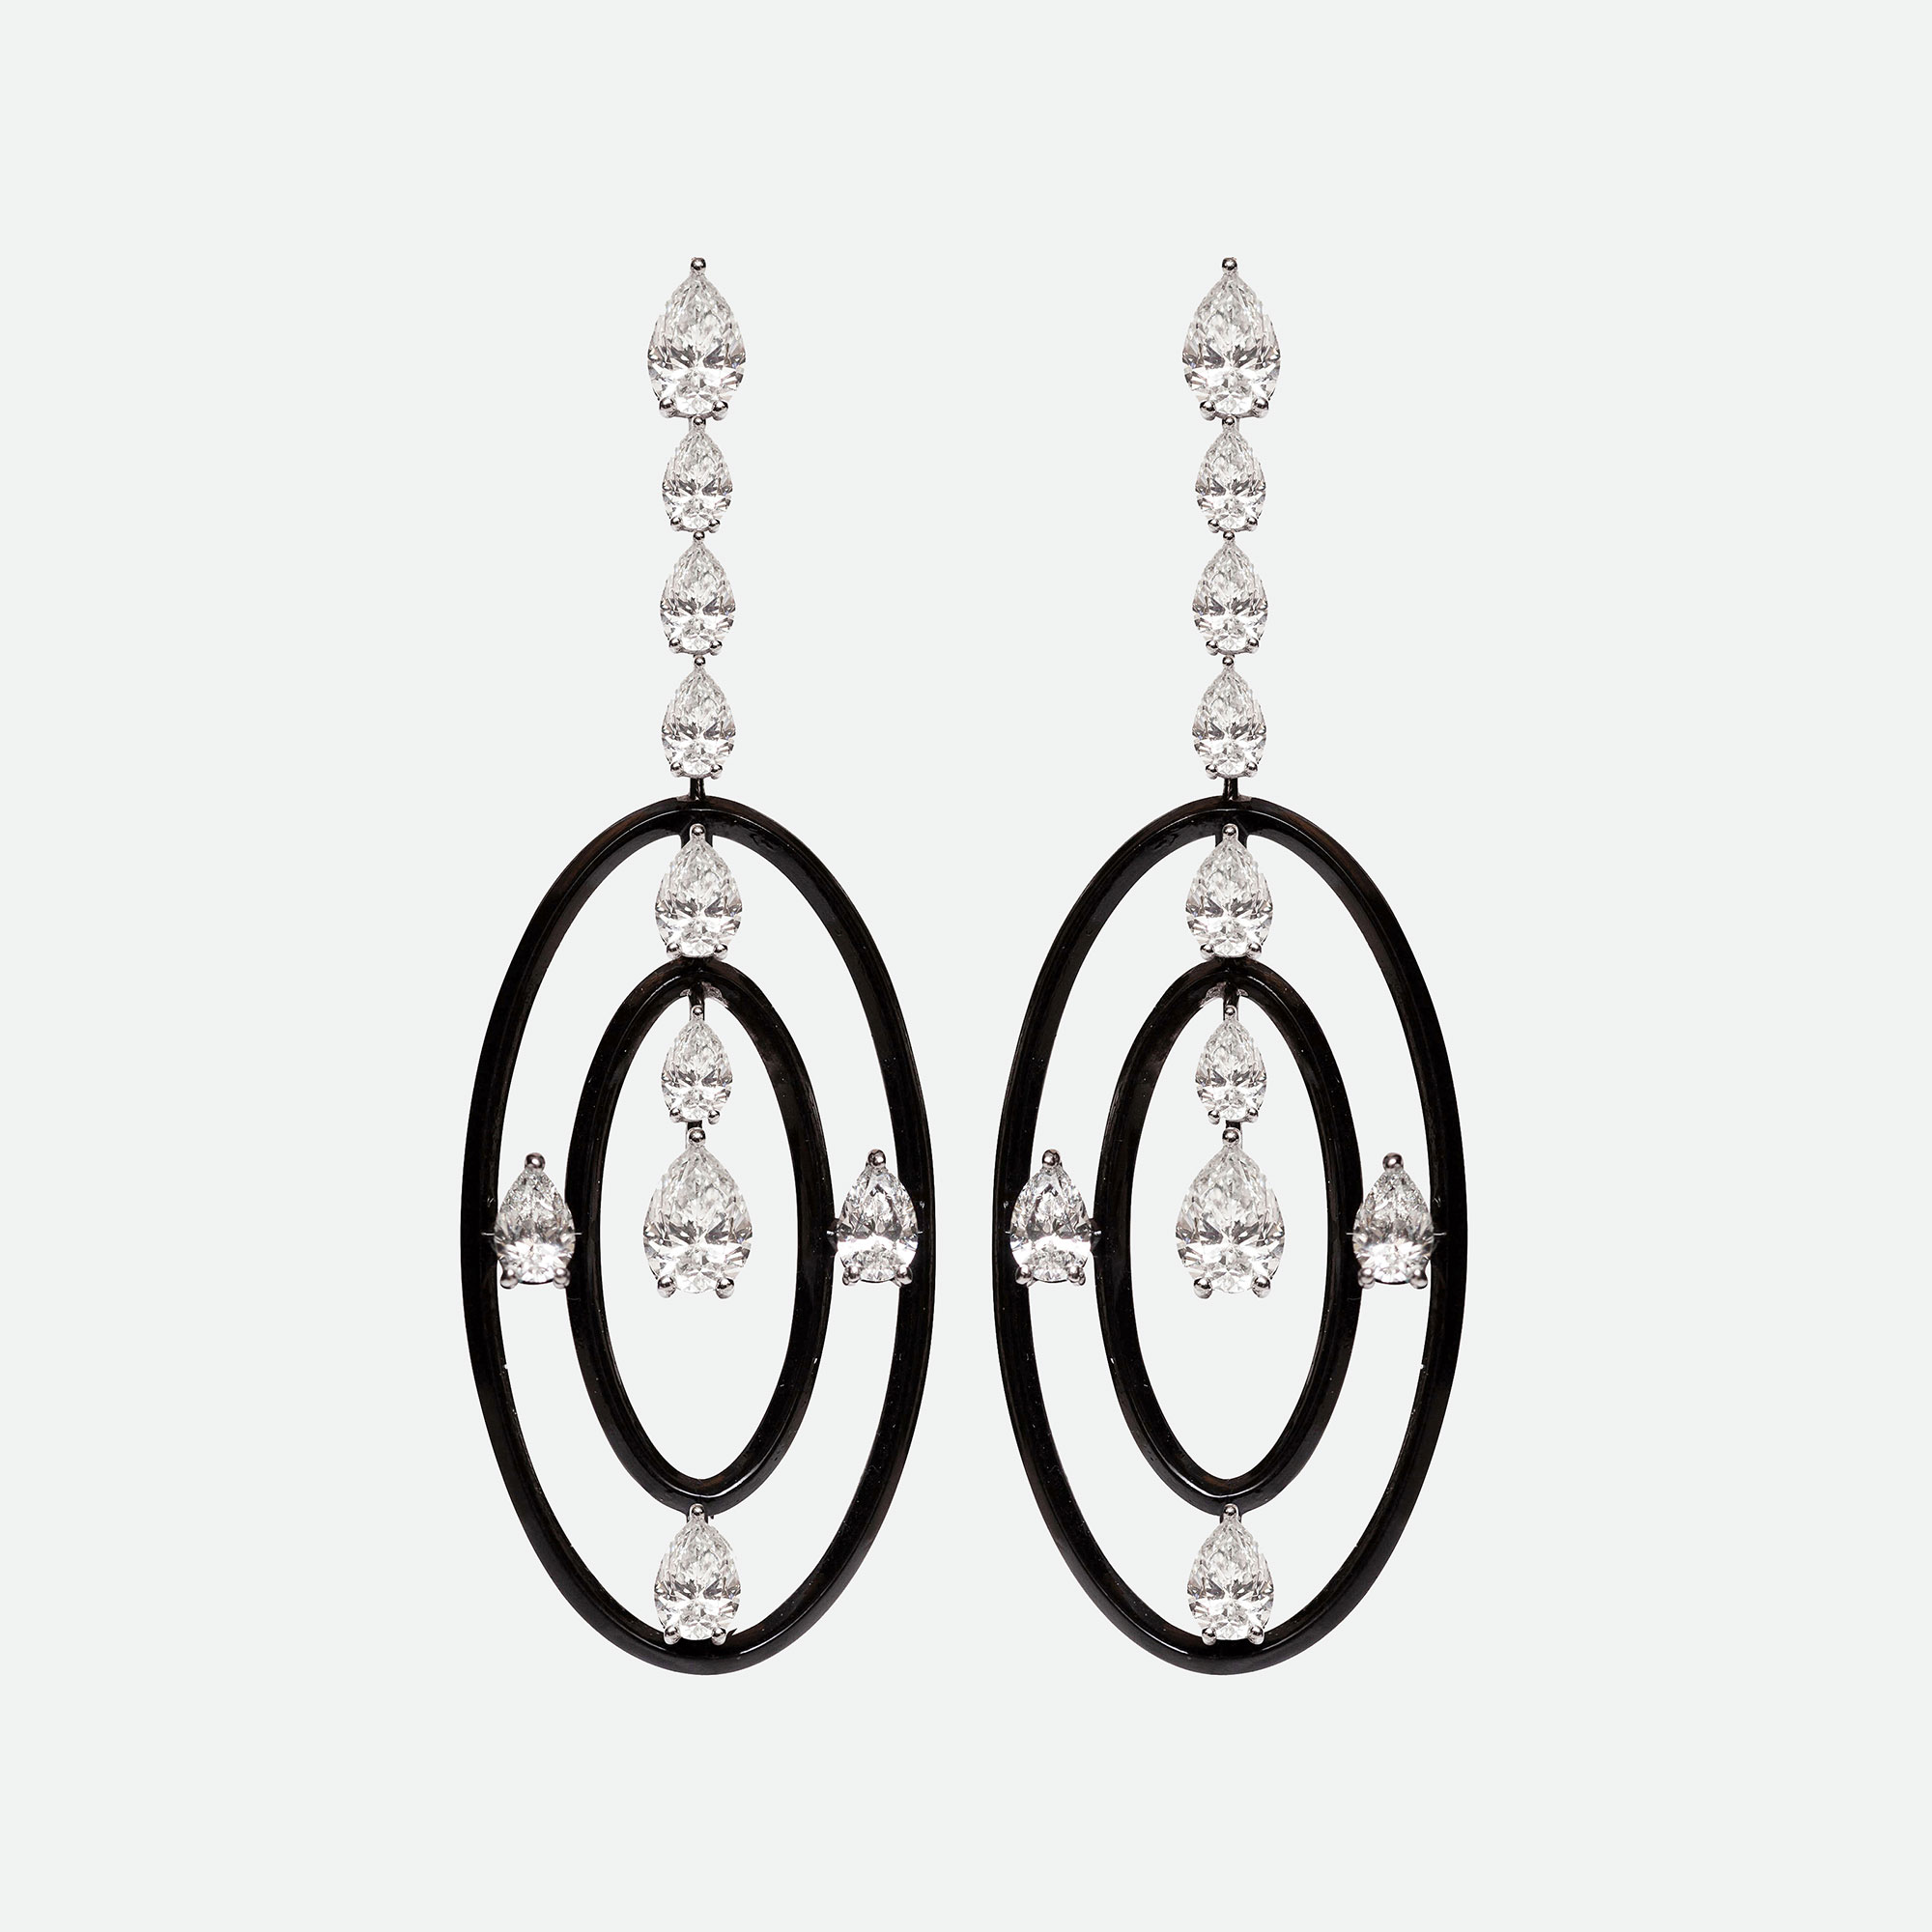 Long white gold earrings with diamonds and black enamel | Venetia